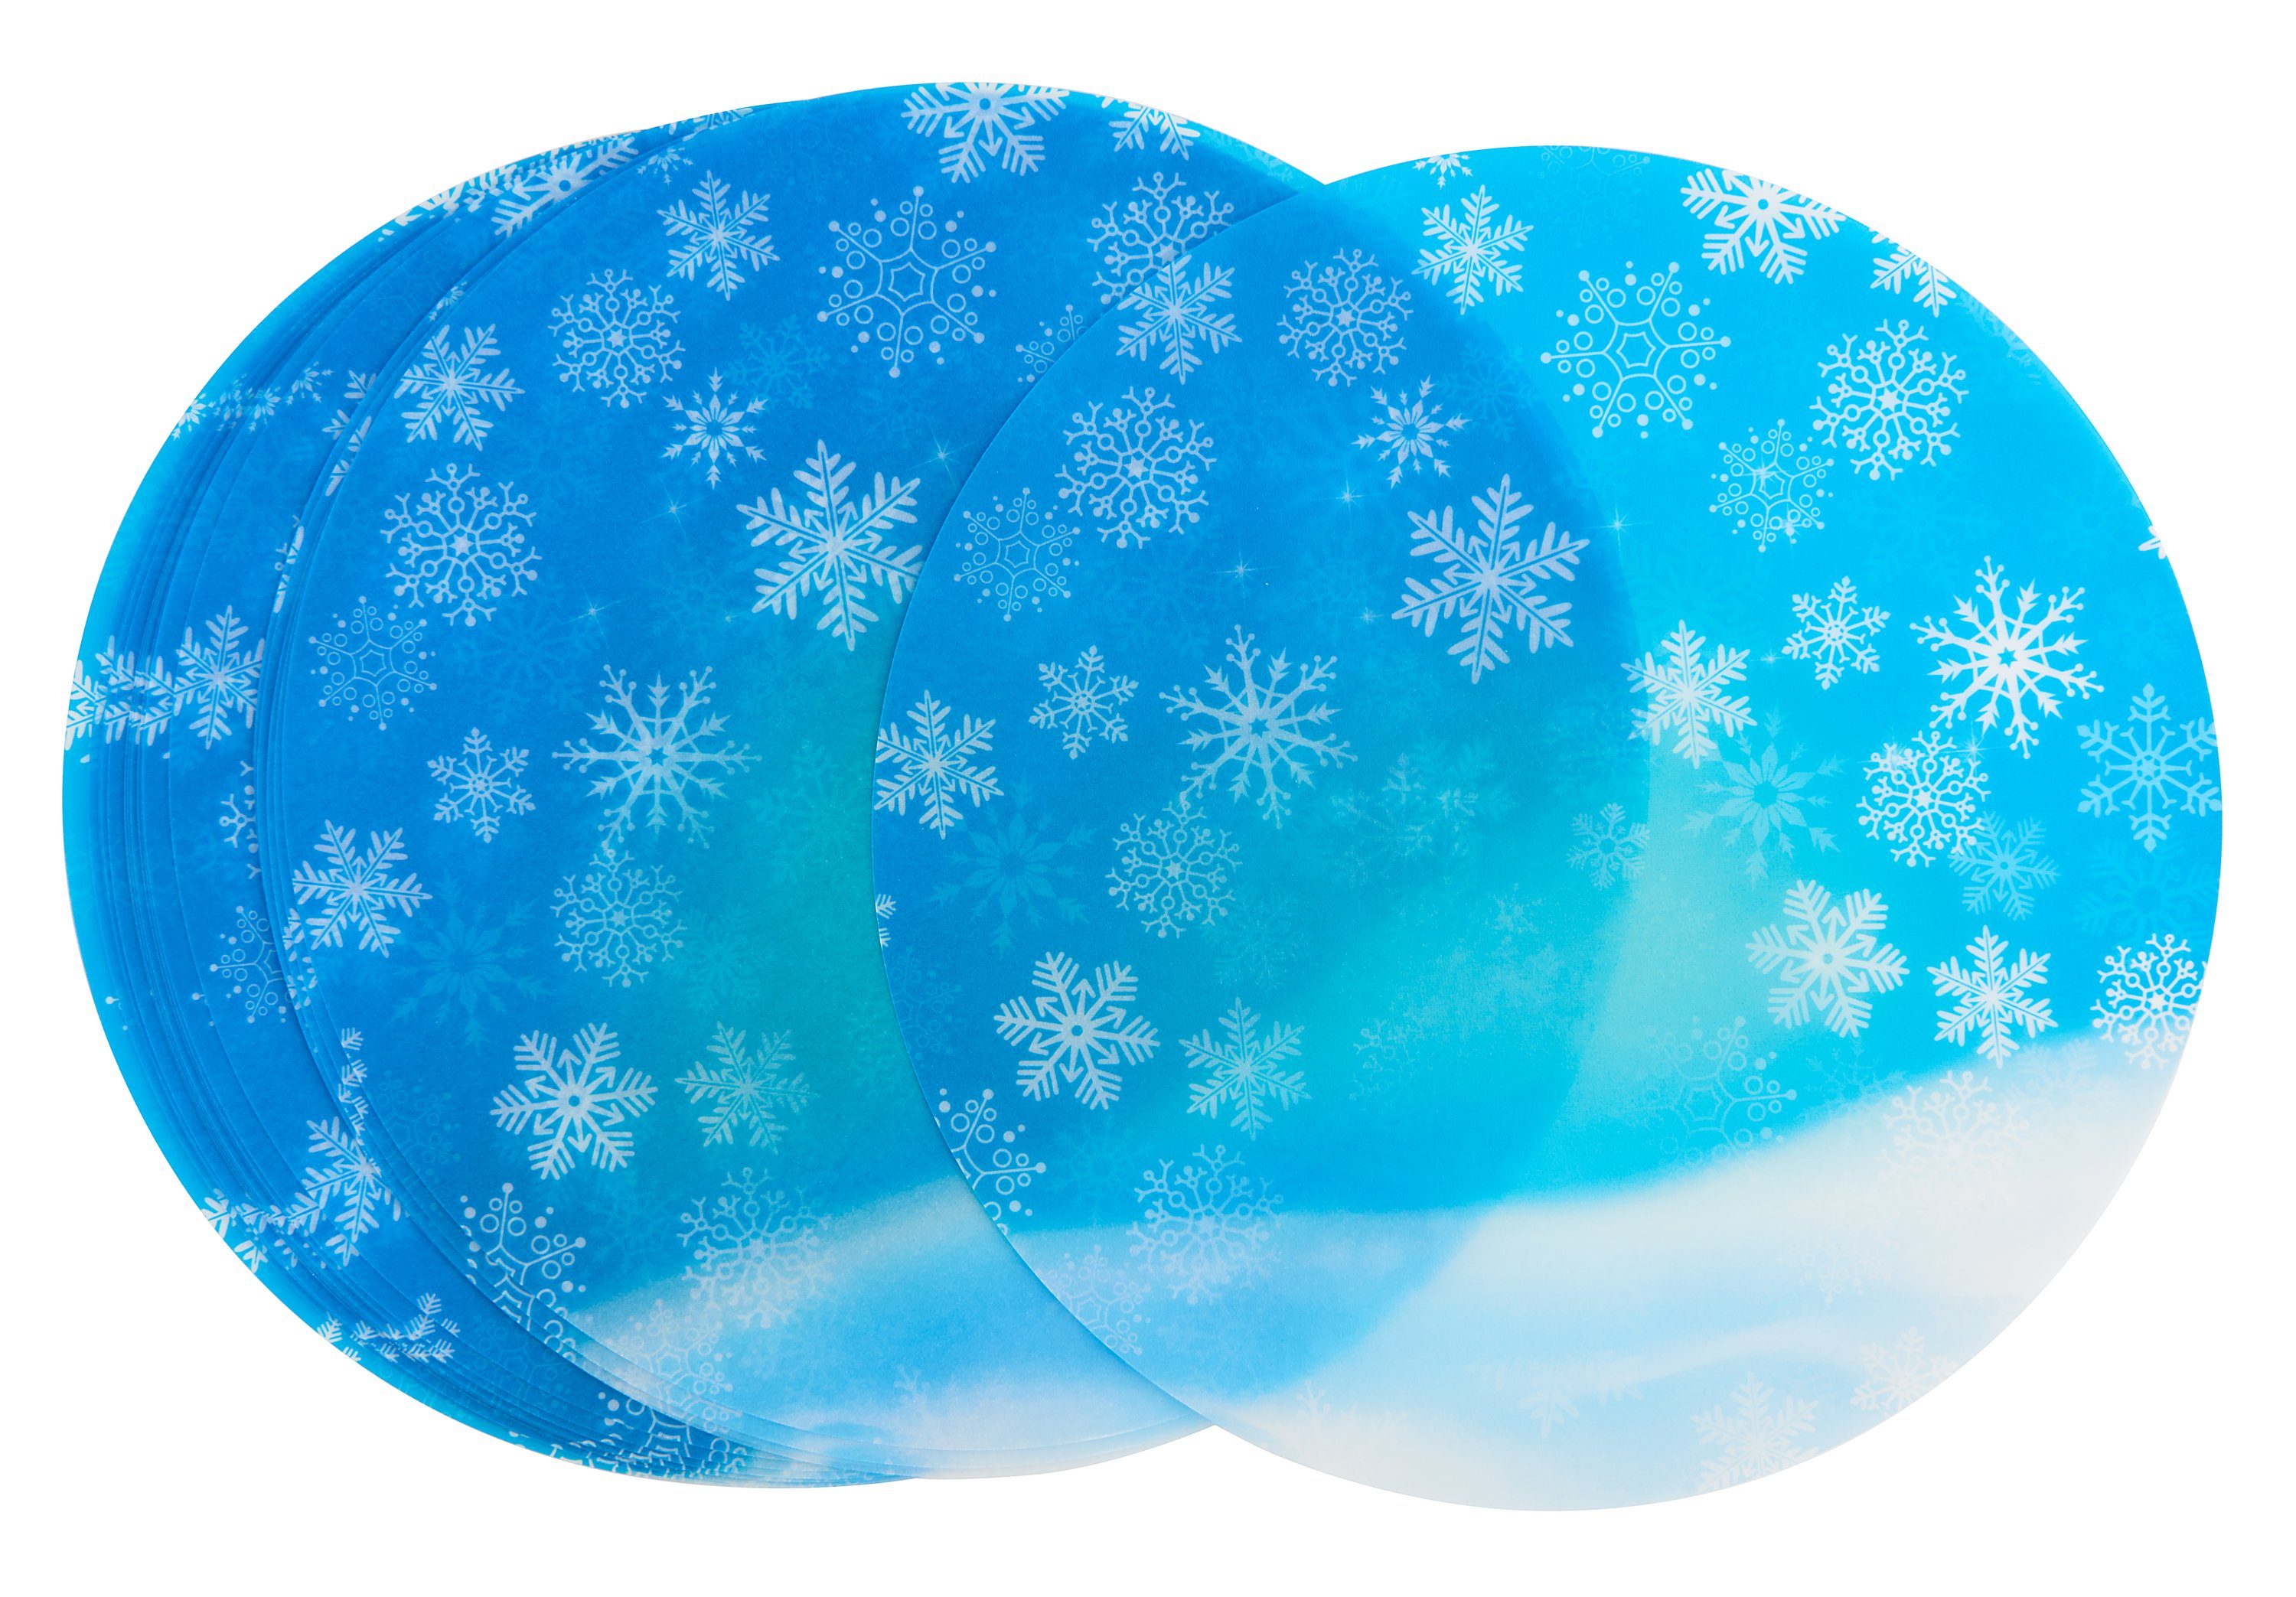 Folia Transparentpapier Laternenzuschnitte aus Transparentpapier, 20 Stück Blau | Schnee